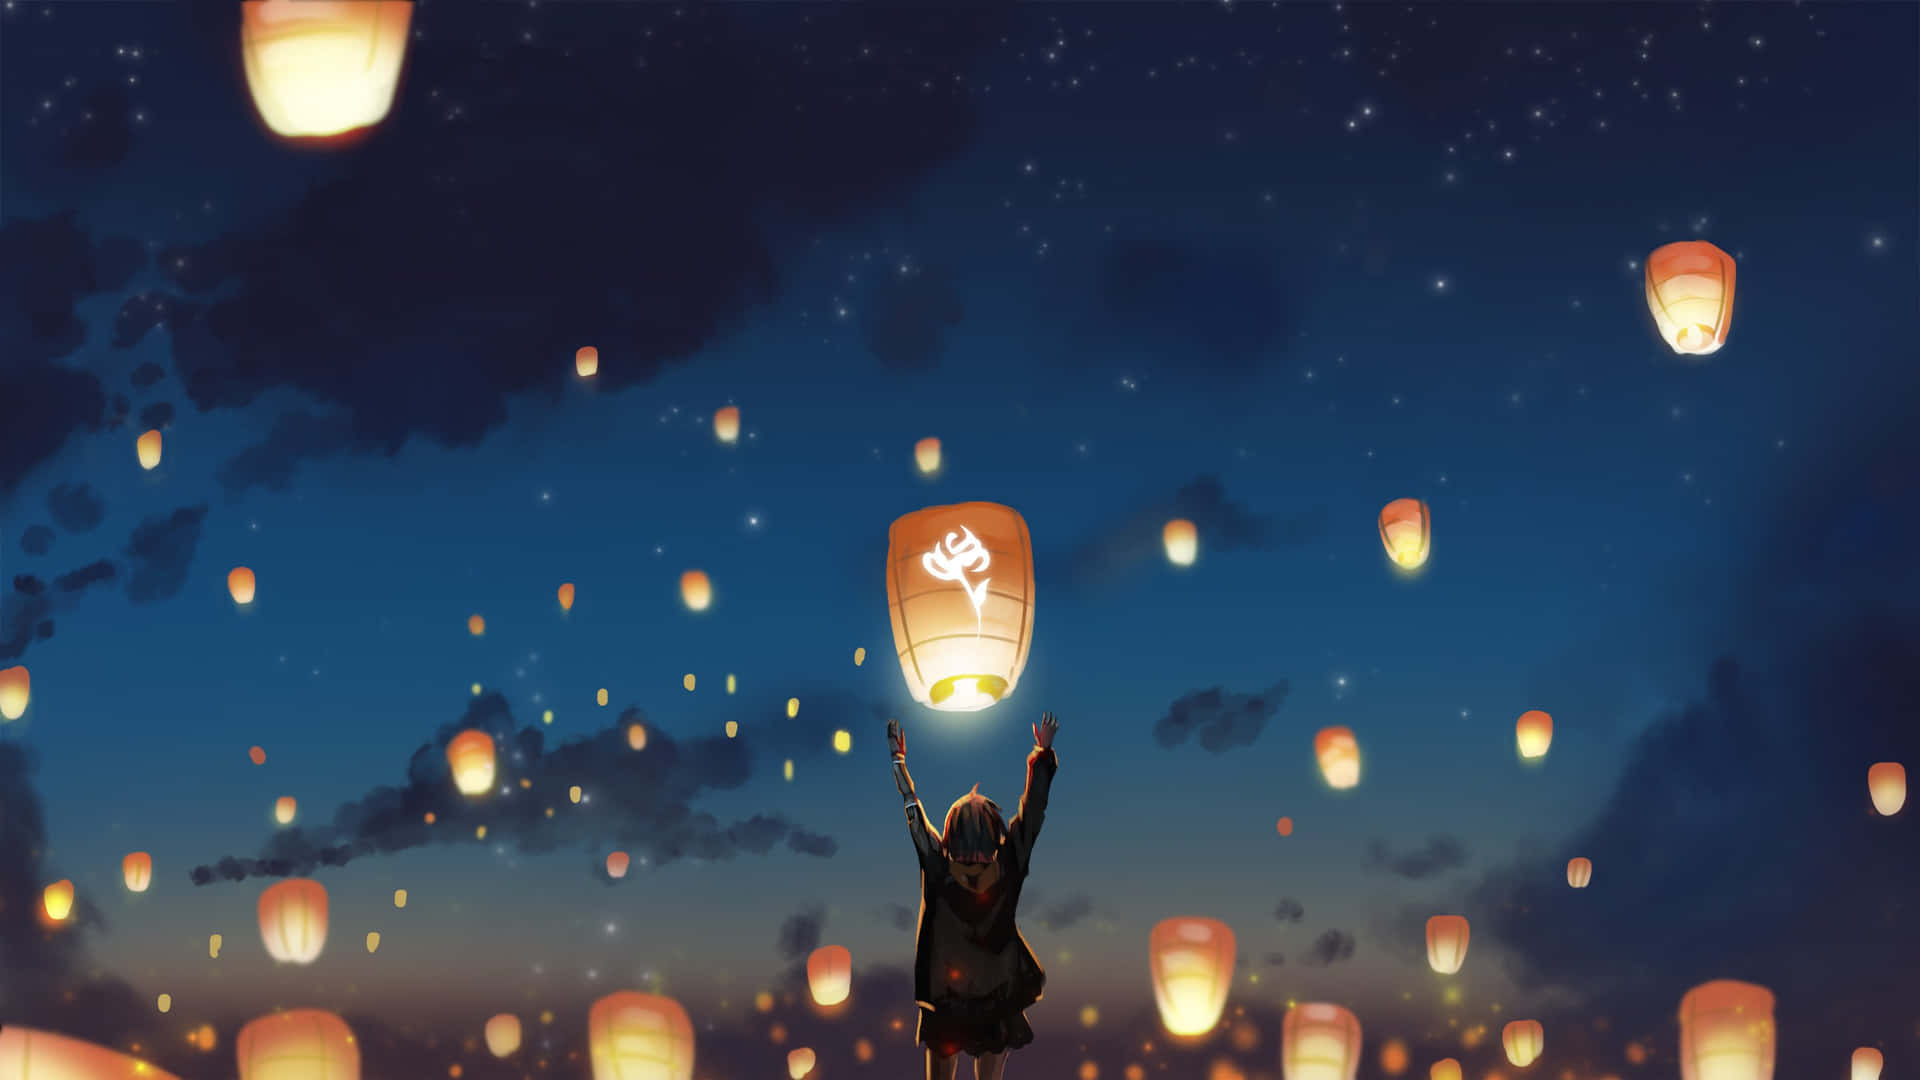 Anime Lantern Night Scenery Wallpaper